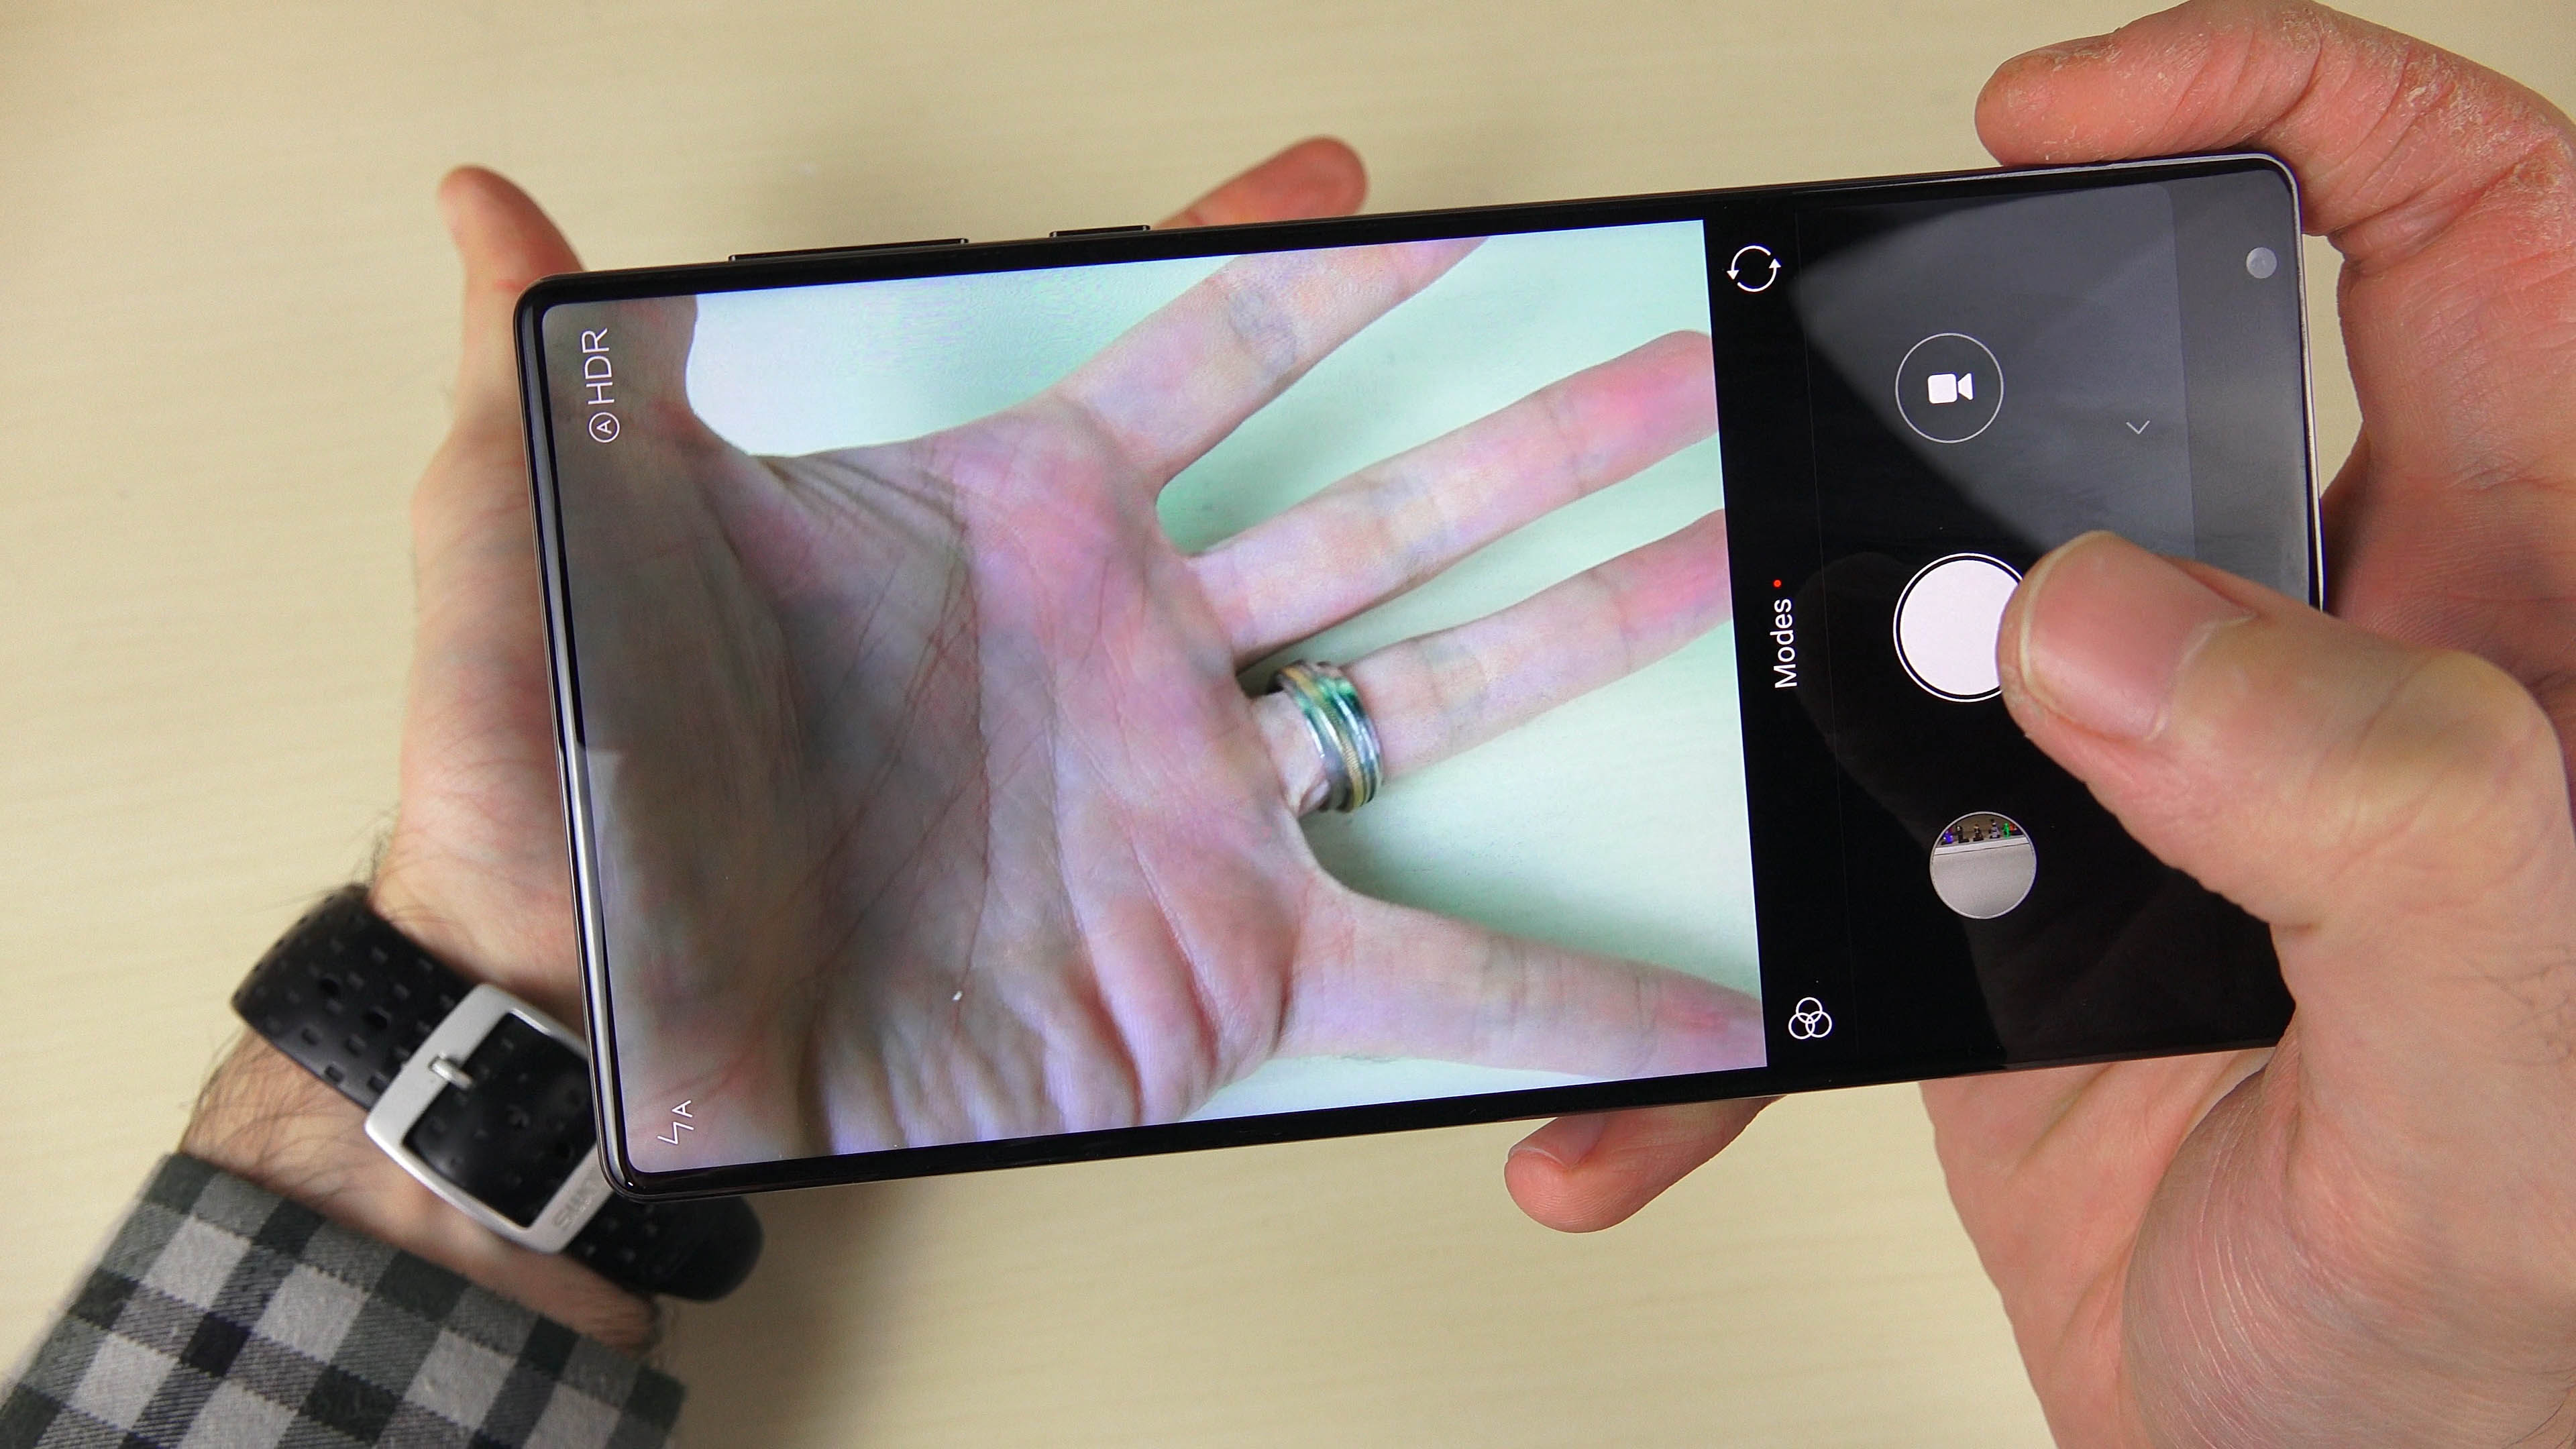 Xiaomi Mi Mix ön inceleme 'Geleceğin telefonu'